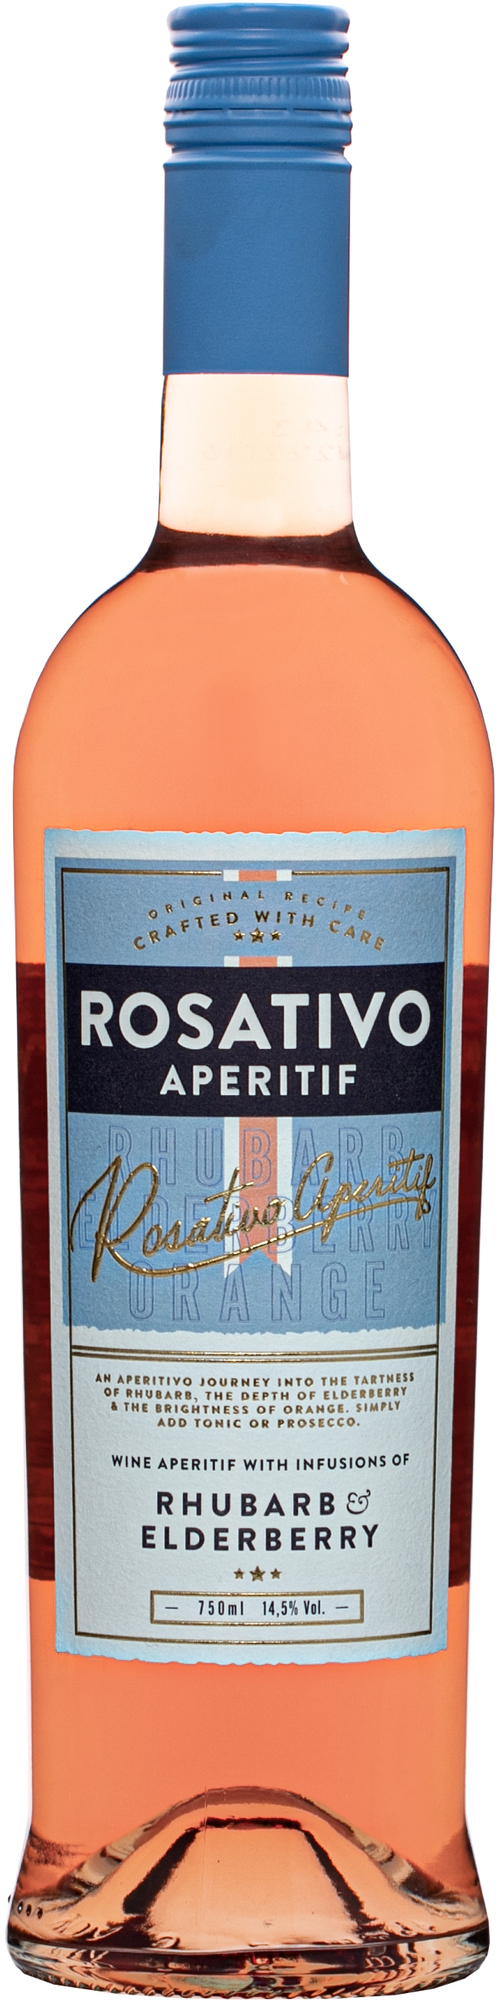 Rosativo Aperitif Rhubarb & Elderberry 14,5% 0,75l